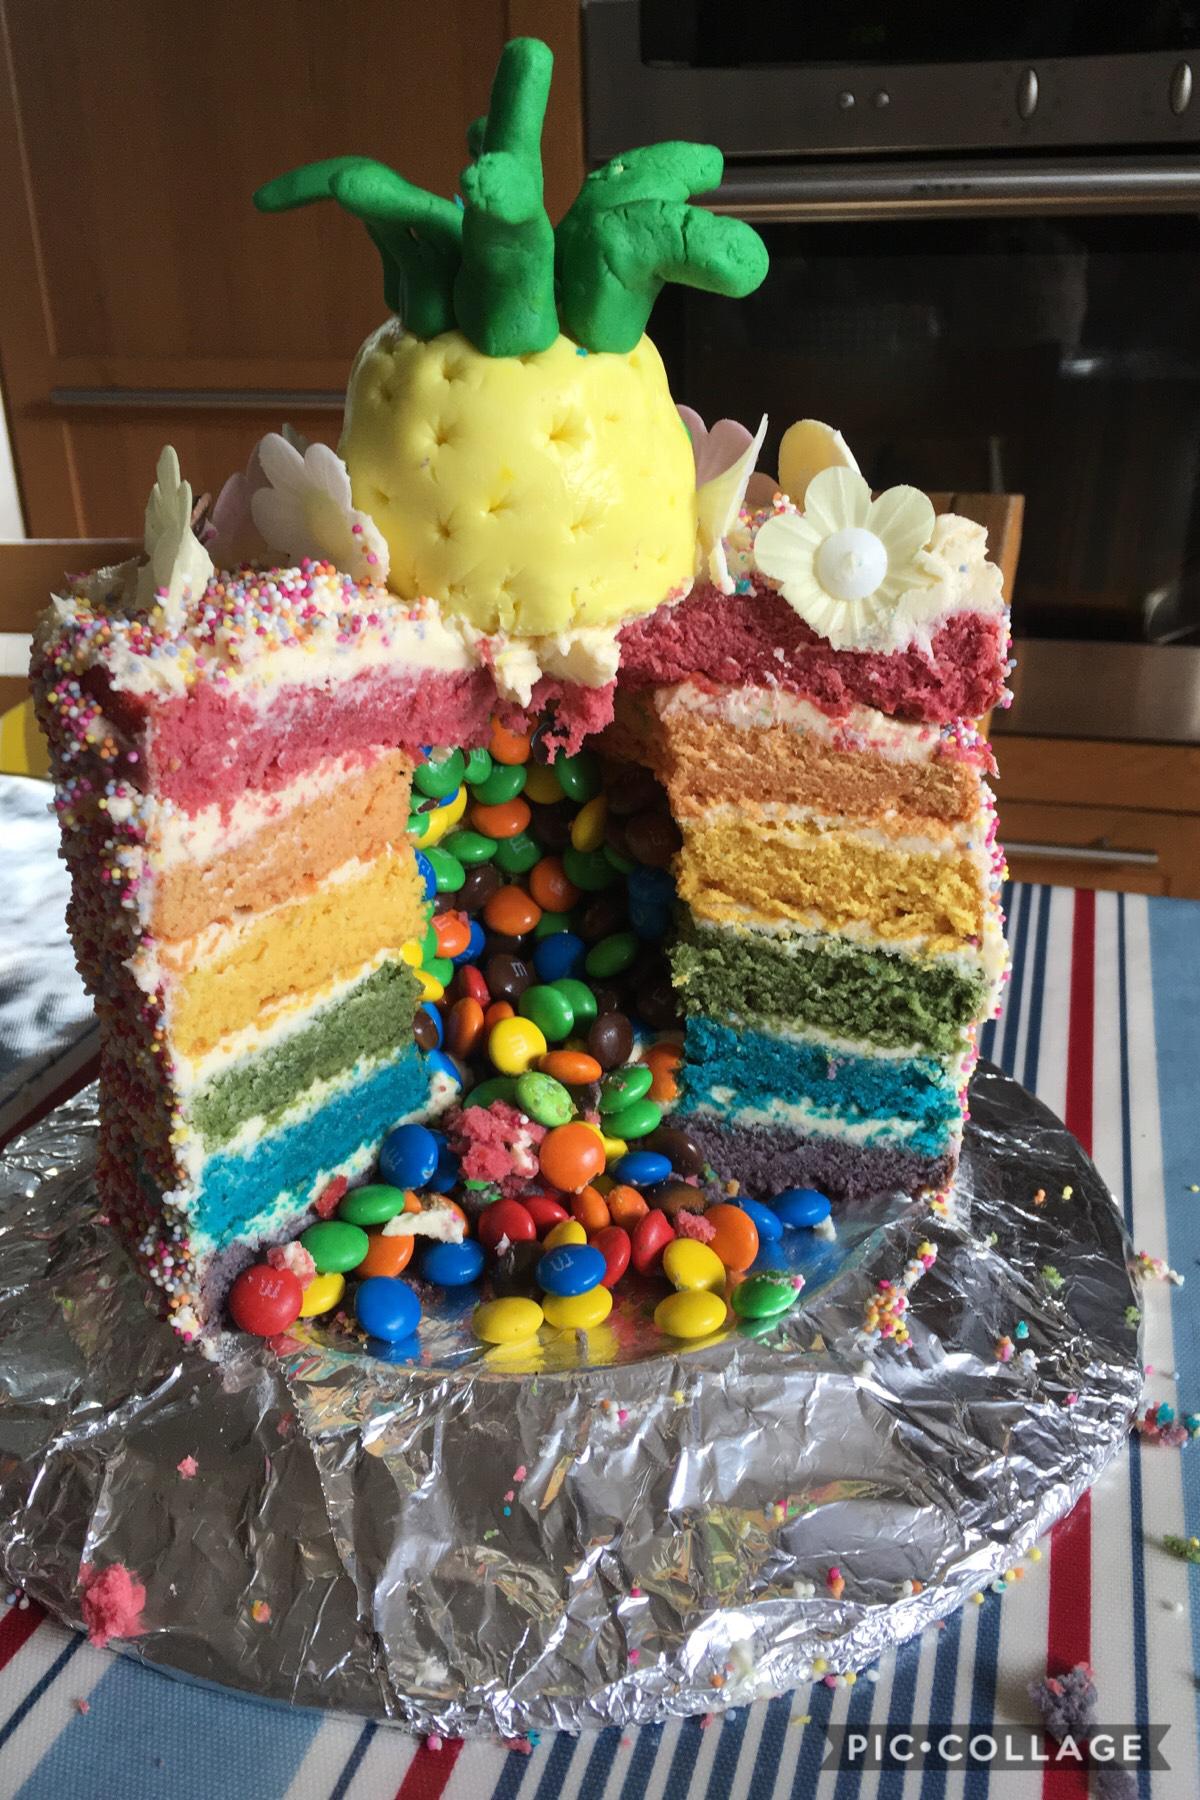 Do you guys like the cake I made!!! 